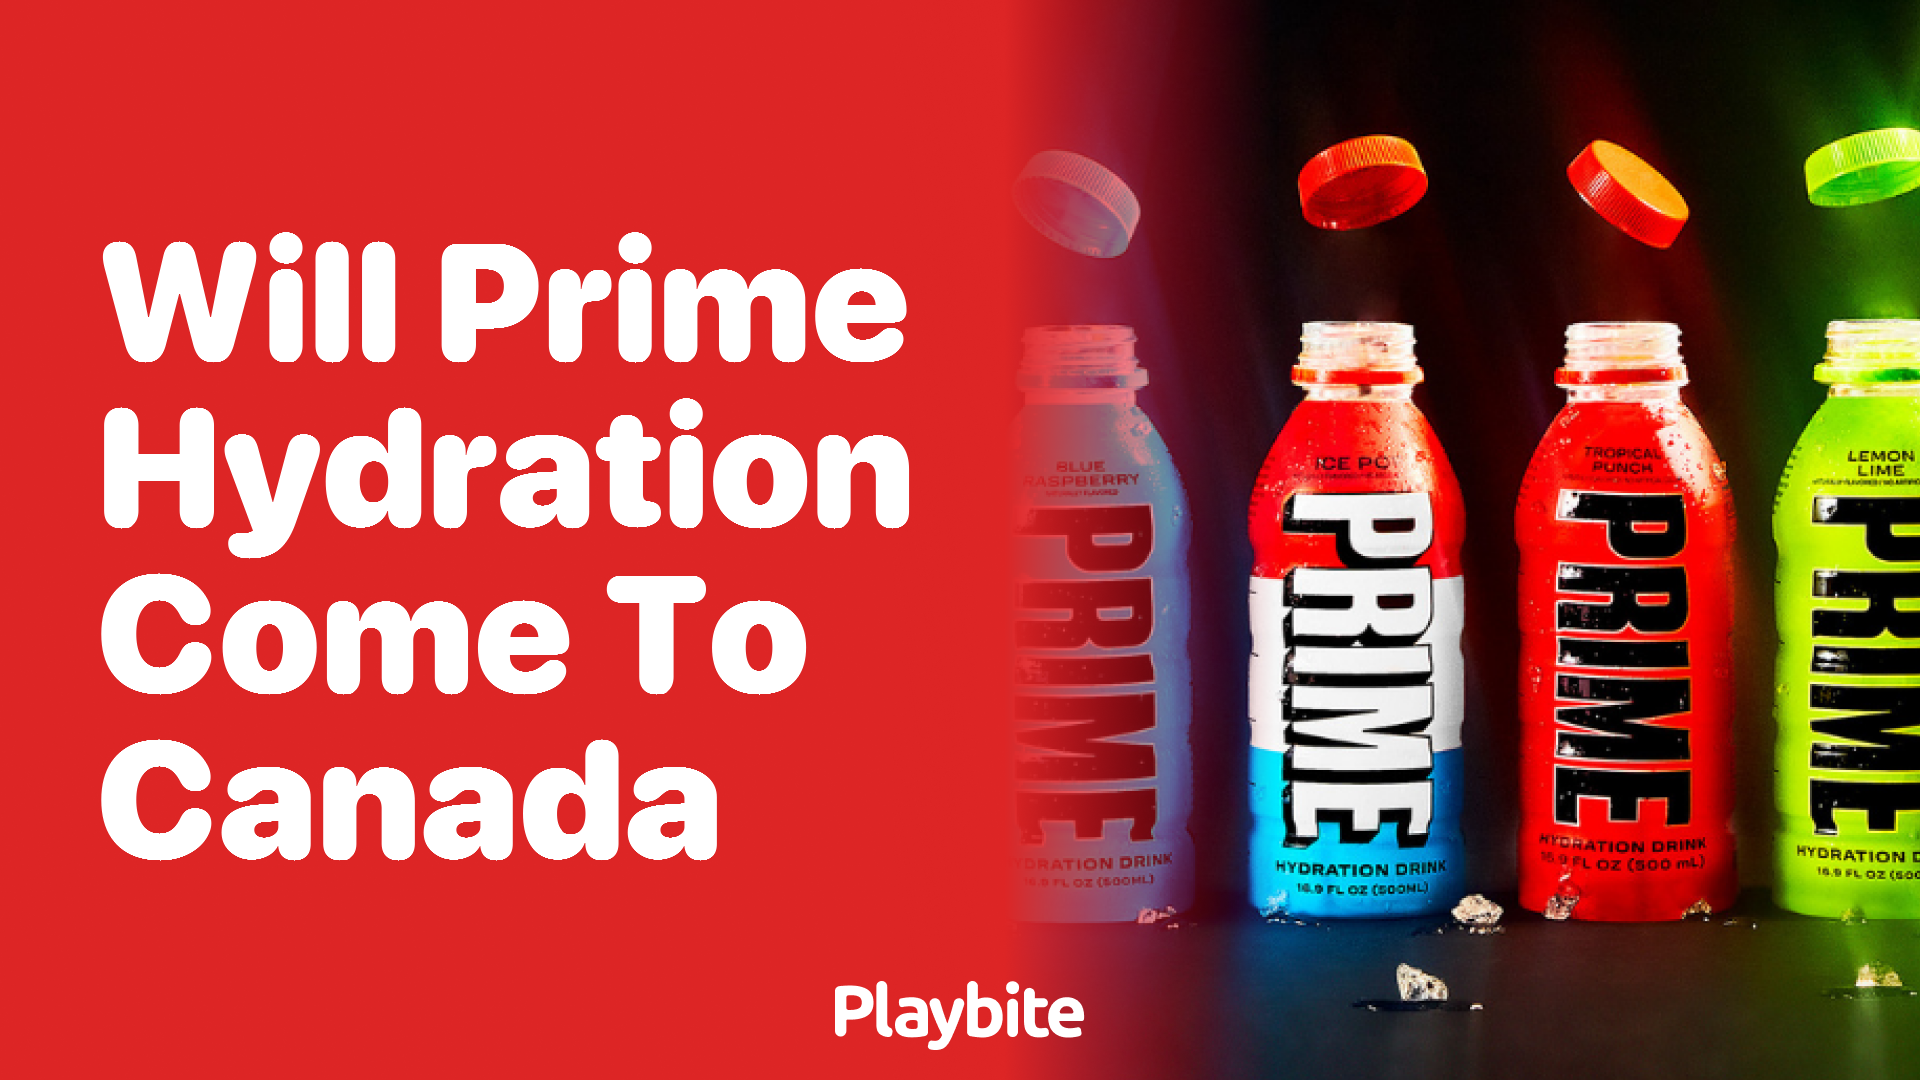 Will Prime Hydration come to Canada?